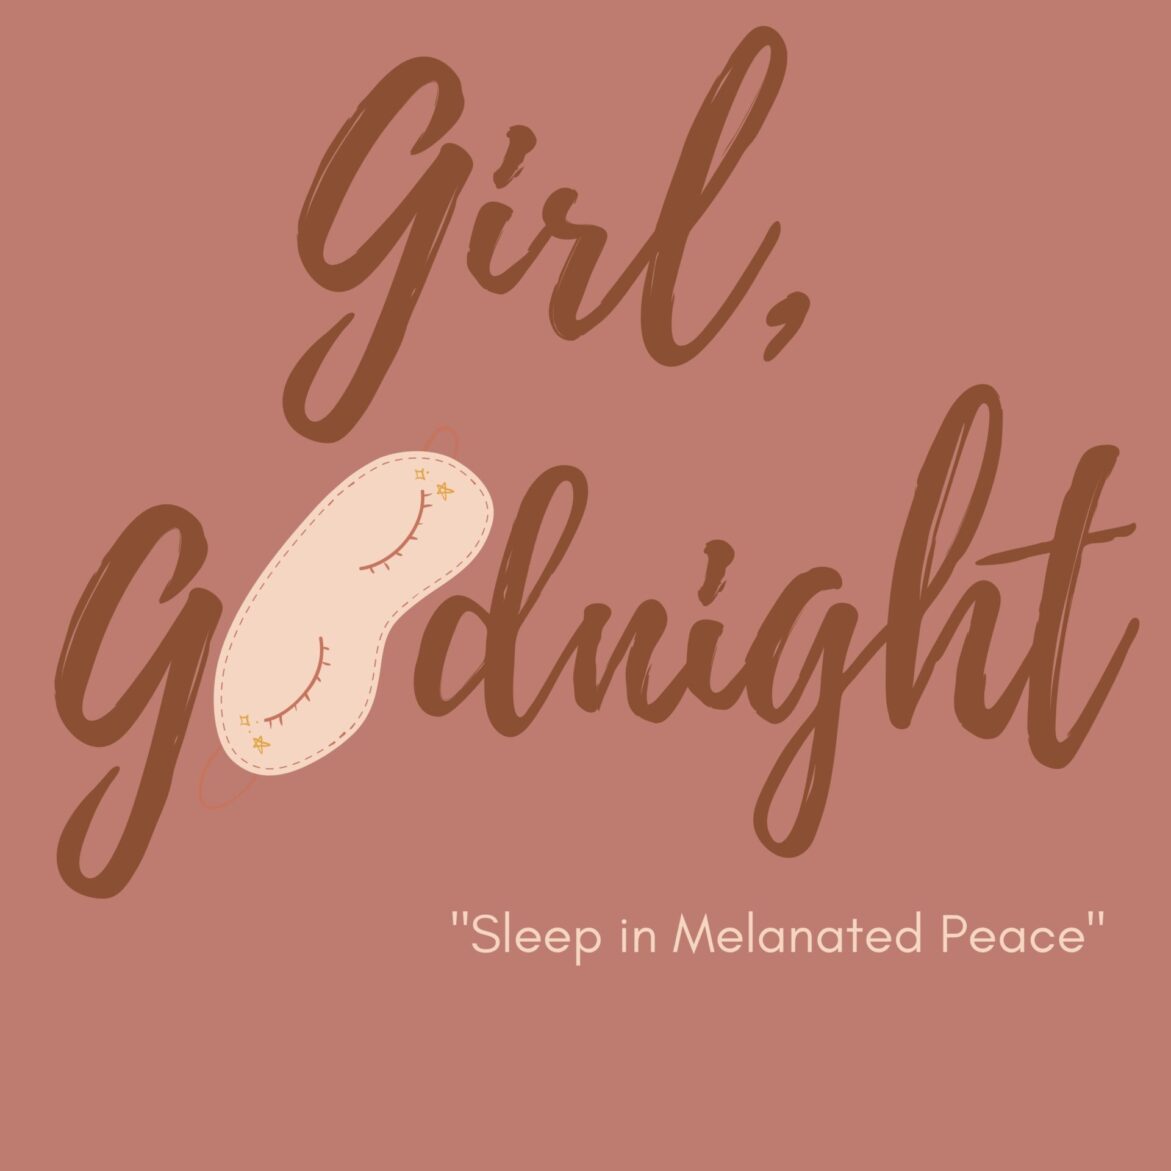 Black Podcasting - The Girl, Goodnight Cap- Episode 2